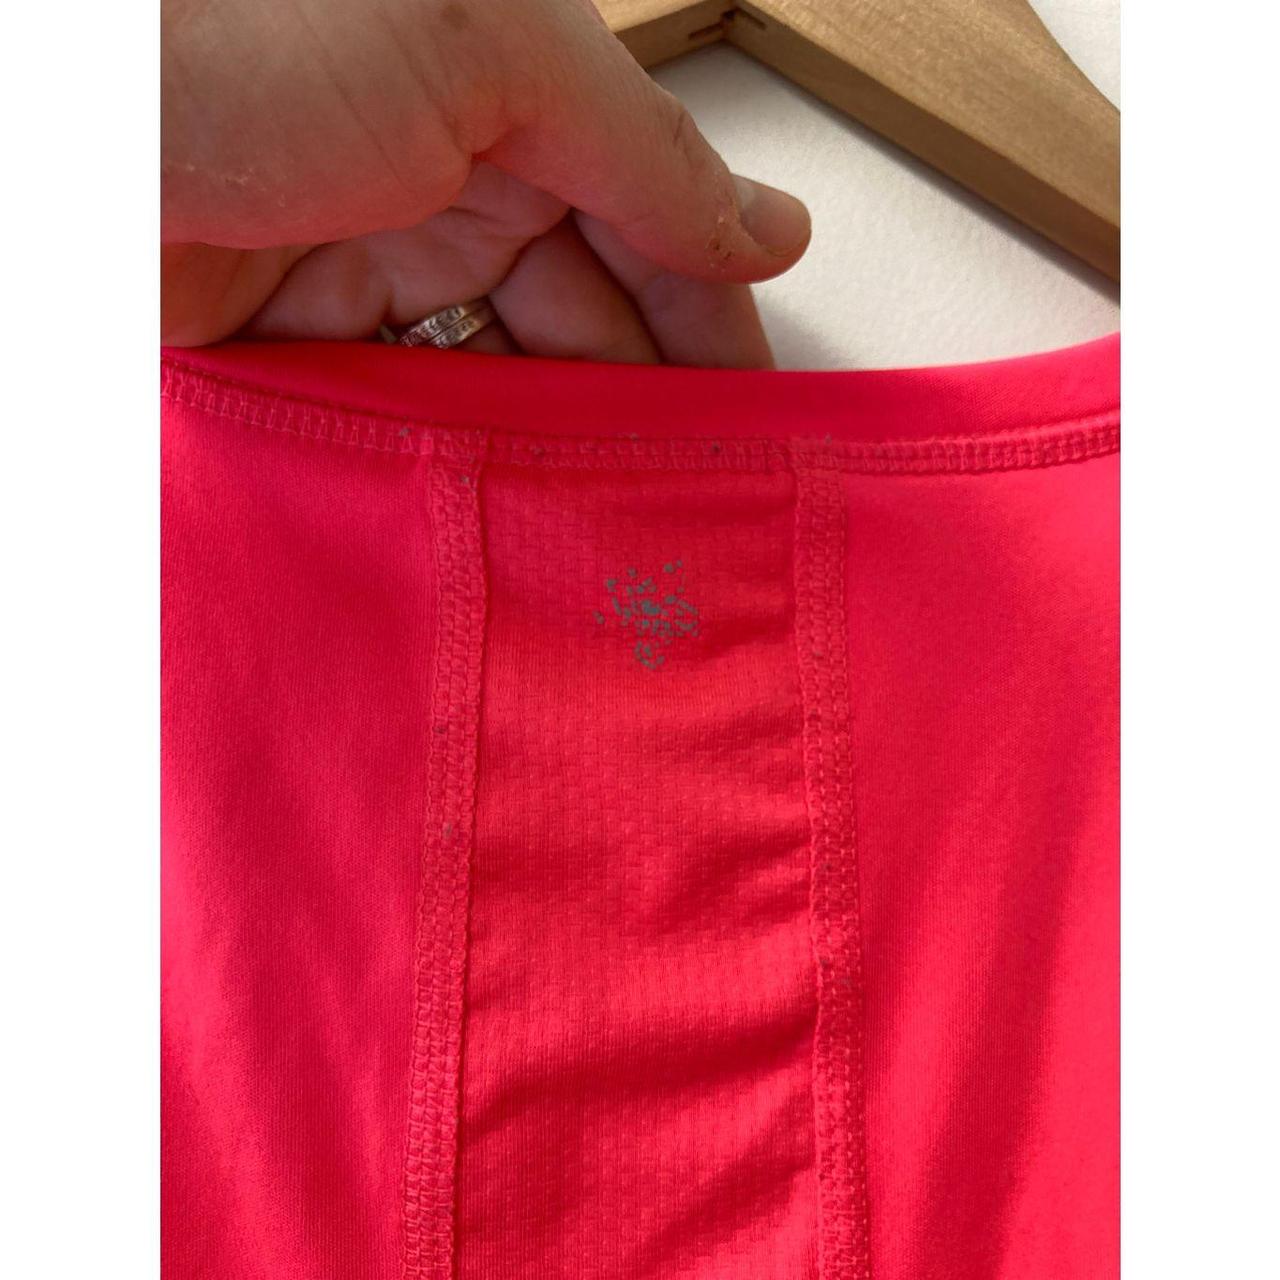 Tuff Athletics sleeveless pink athletic tank top - Depop